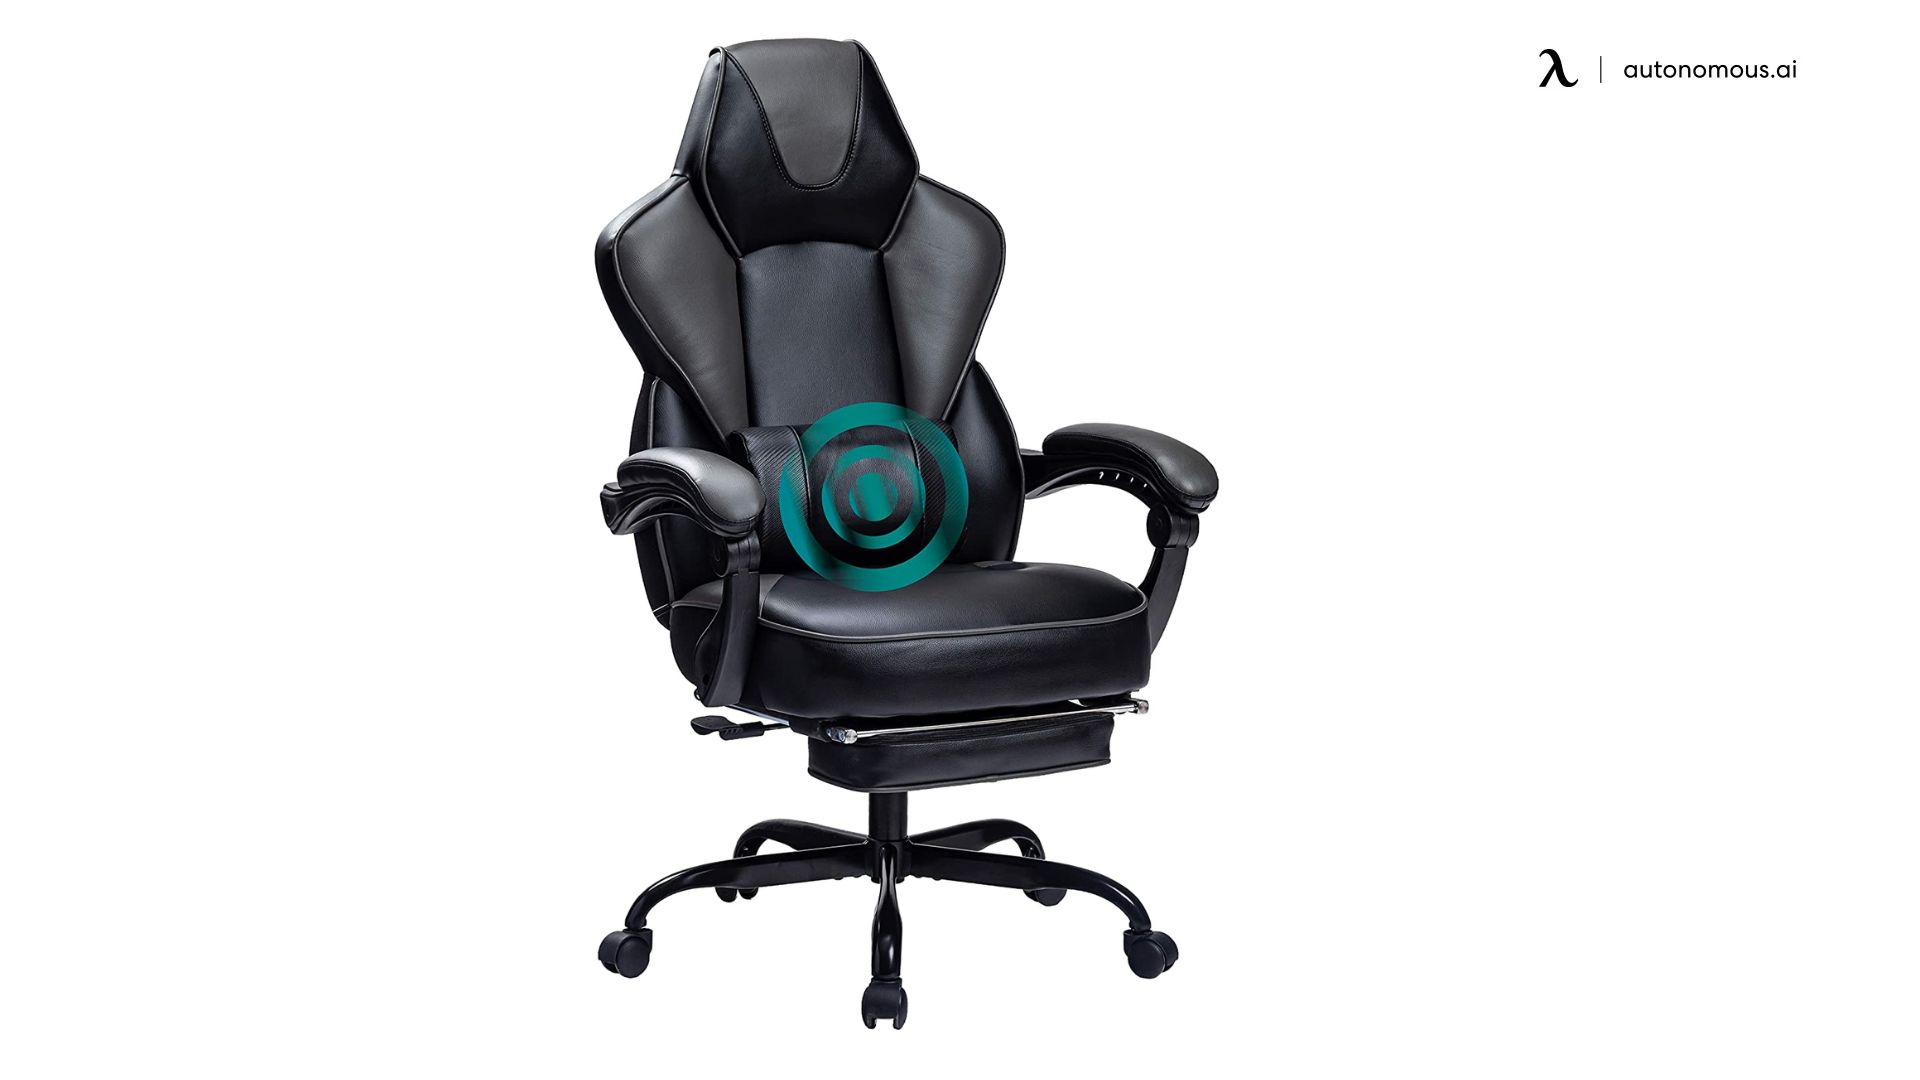 HEALGEN Gaming Chair with Footrest